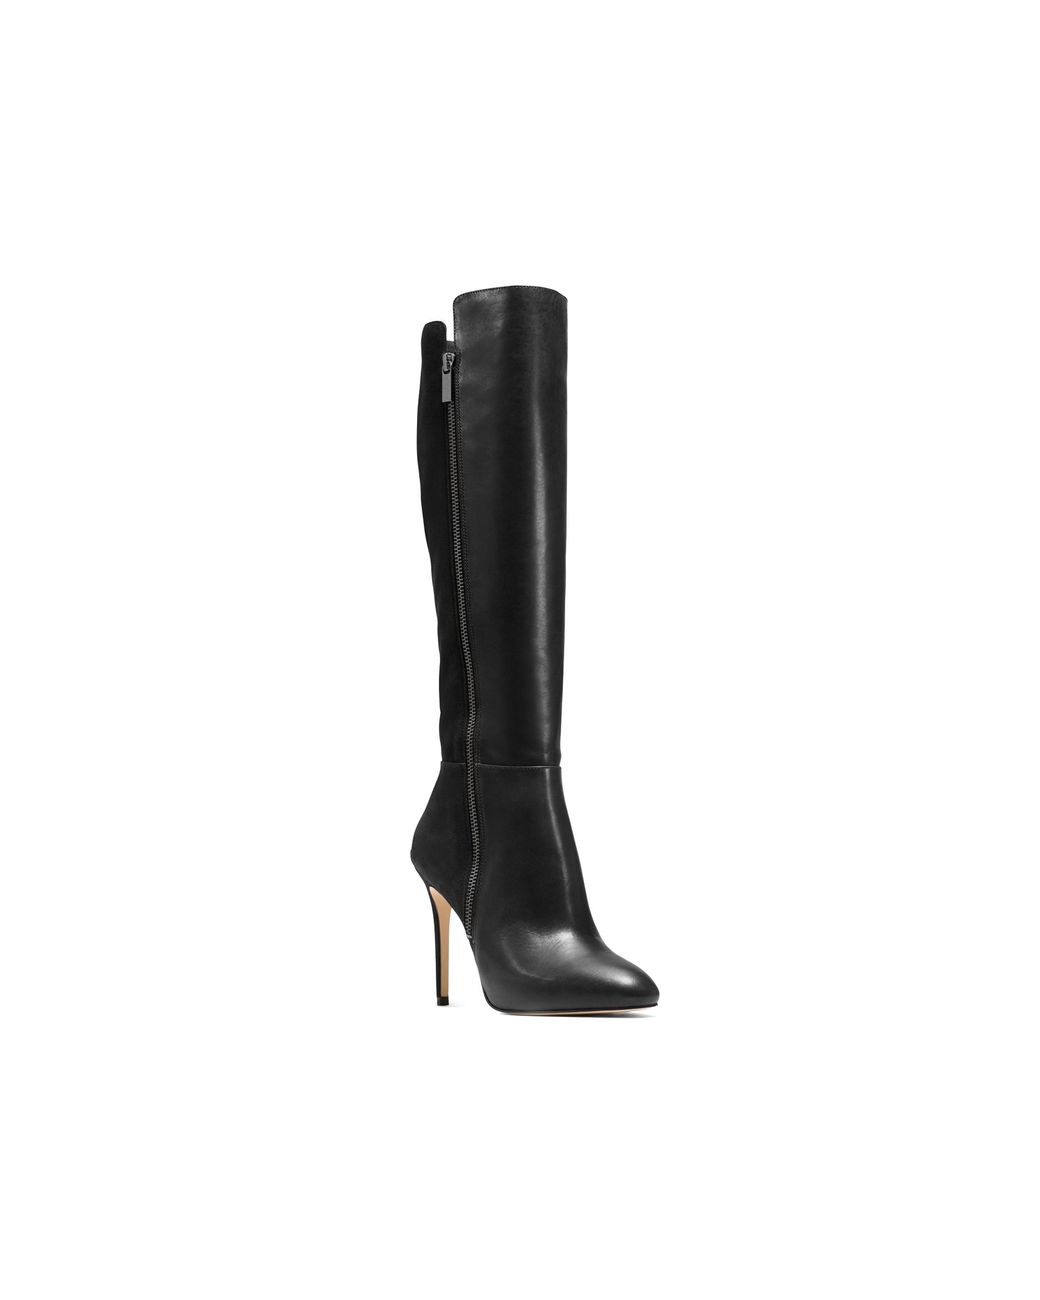 MICHAEL Michael Kors Clara Tall High Heel Boots in Black | Lyst